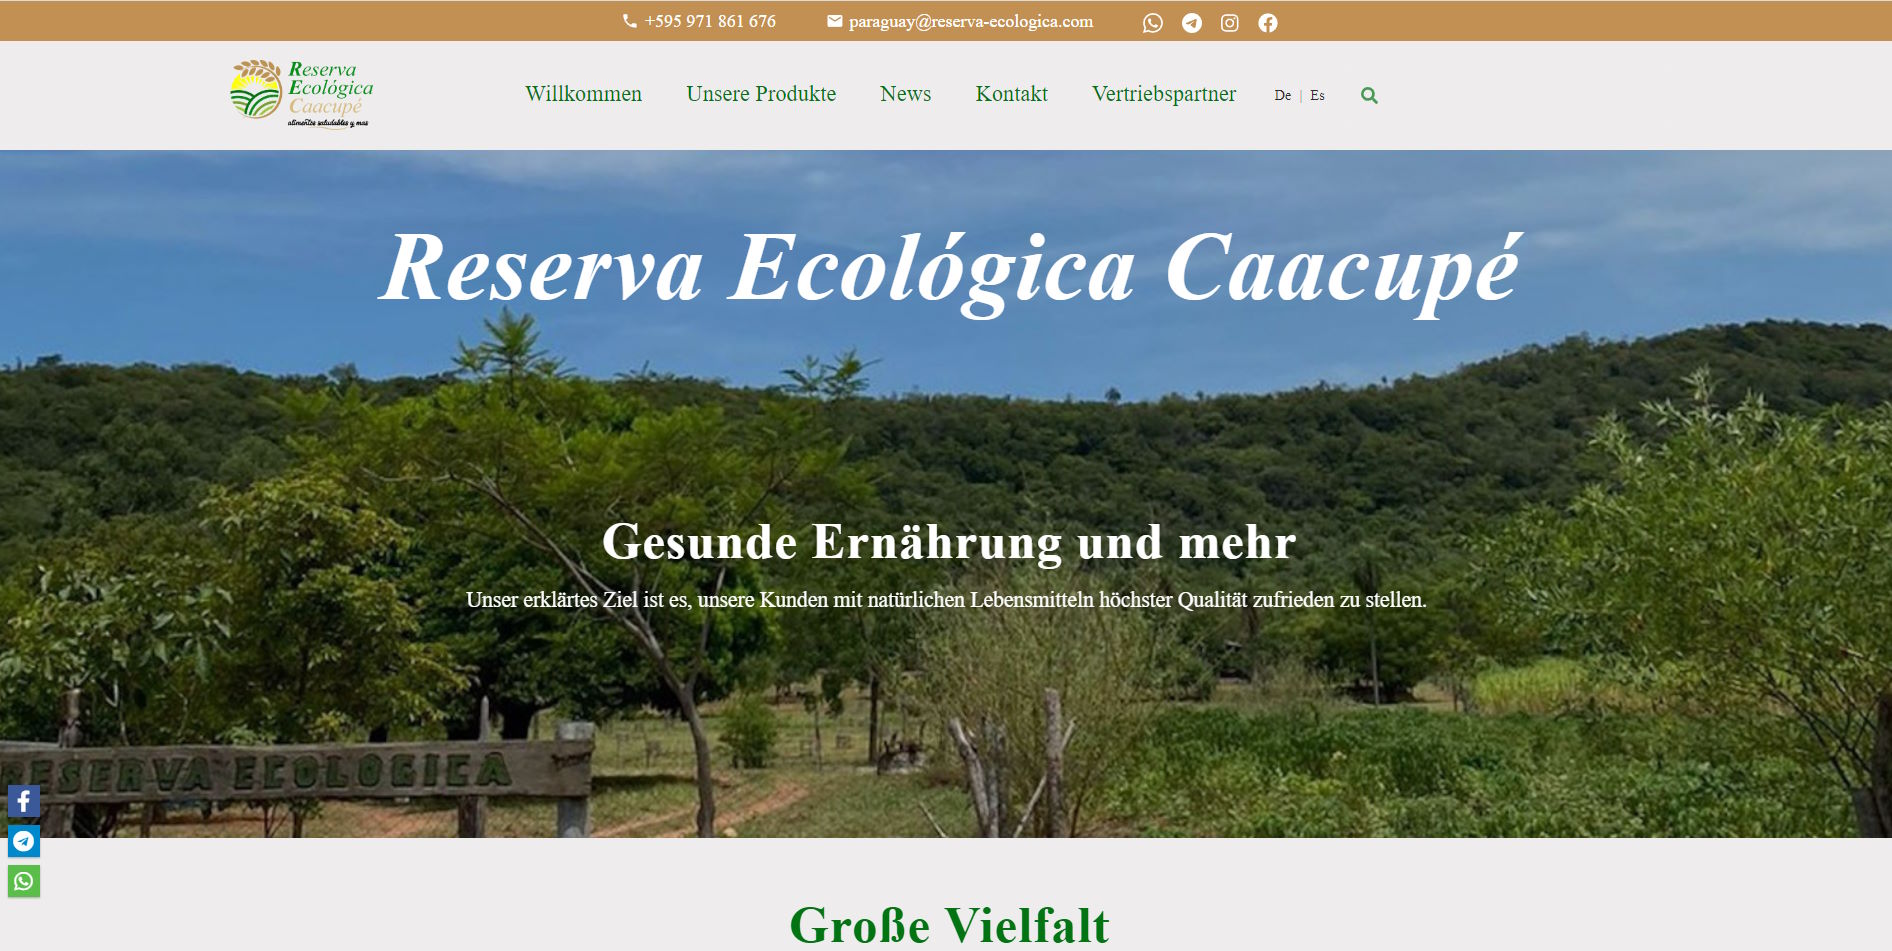 Reserva Ecologica Caacupe, Familie burger, J&B Igl Web